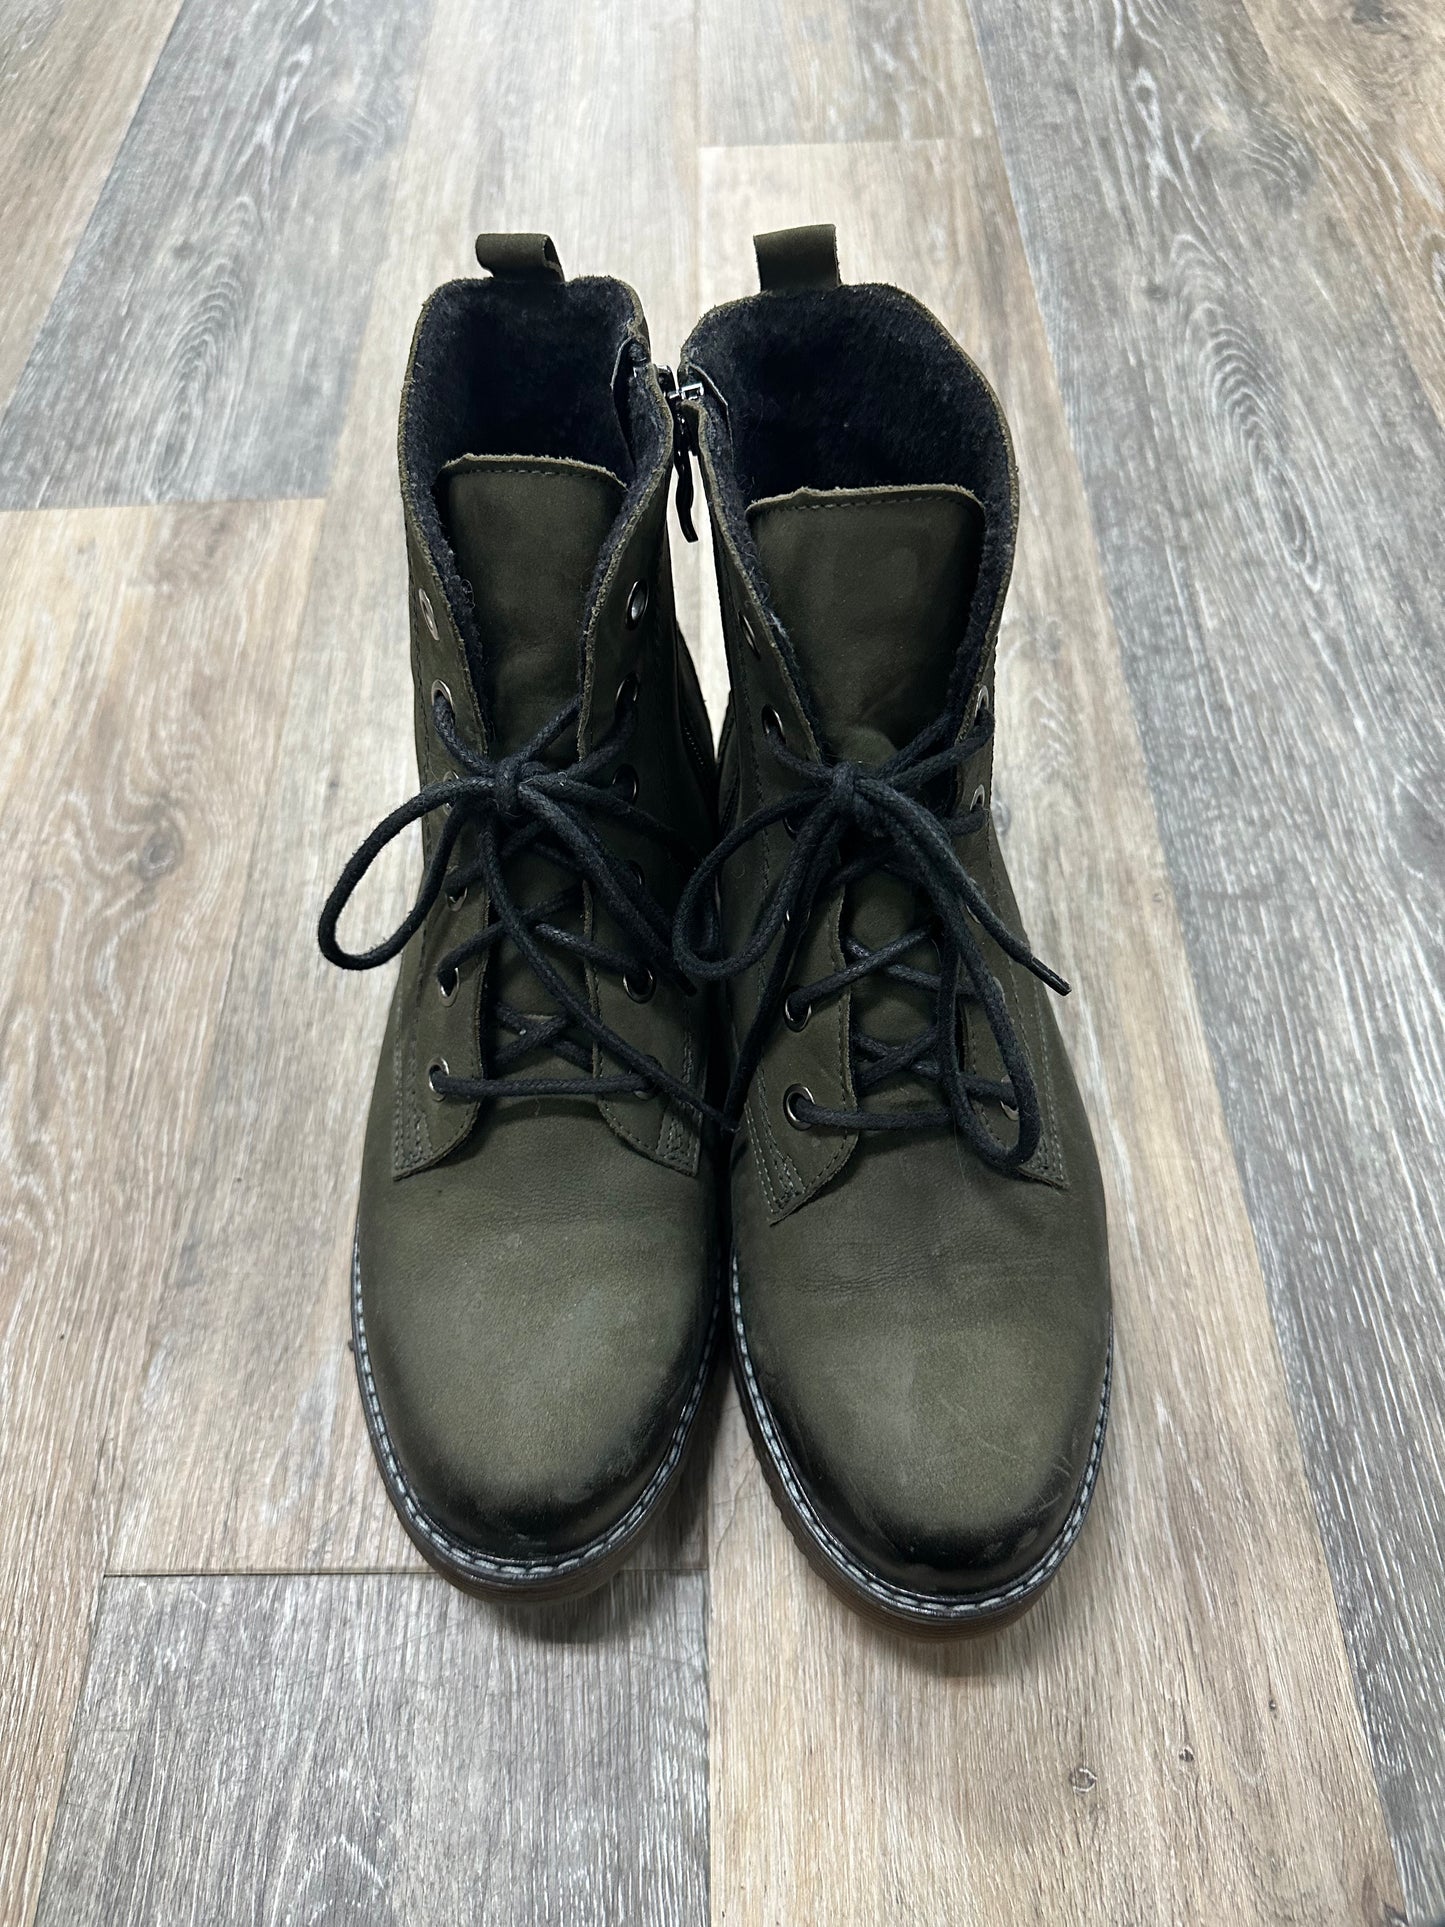 Boots Combat By Dr Scholls  Size: 9